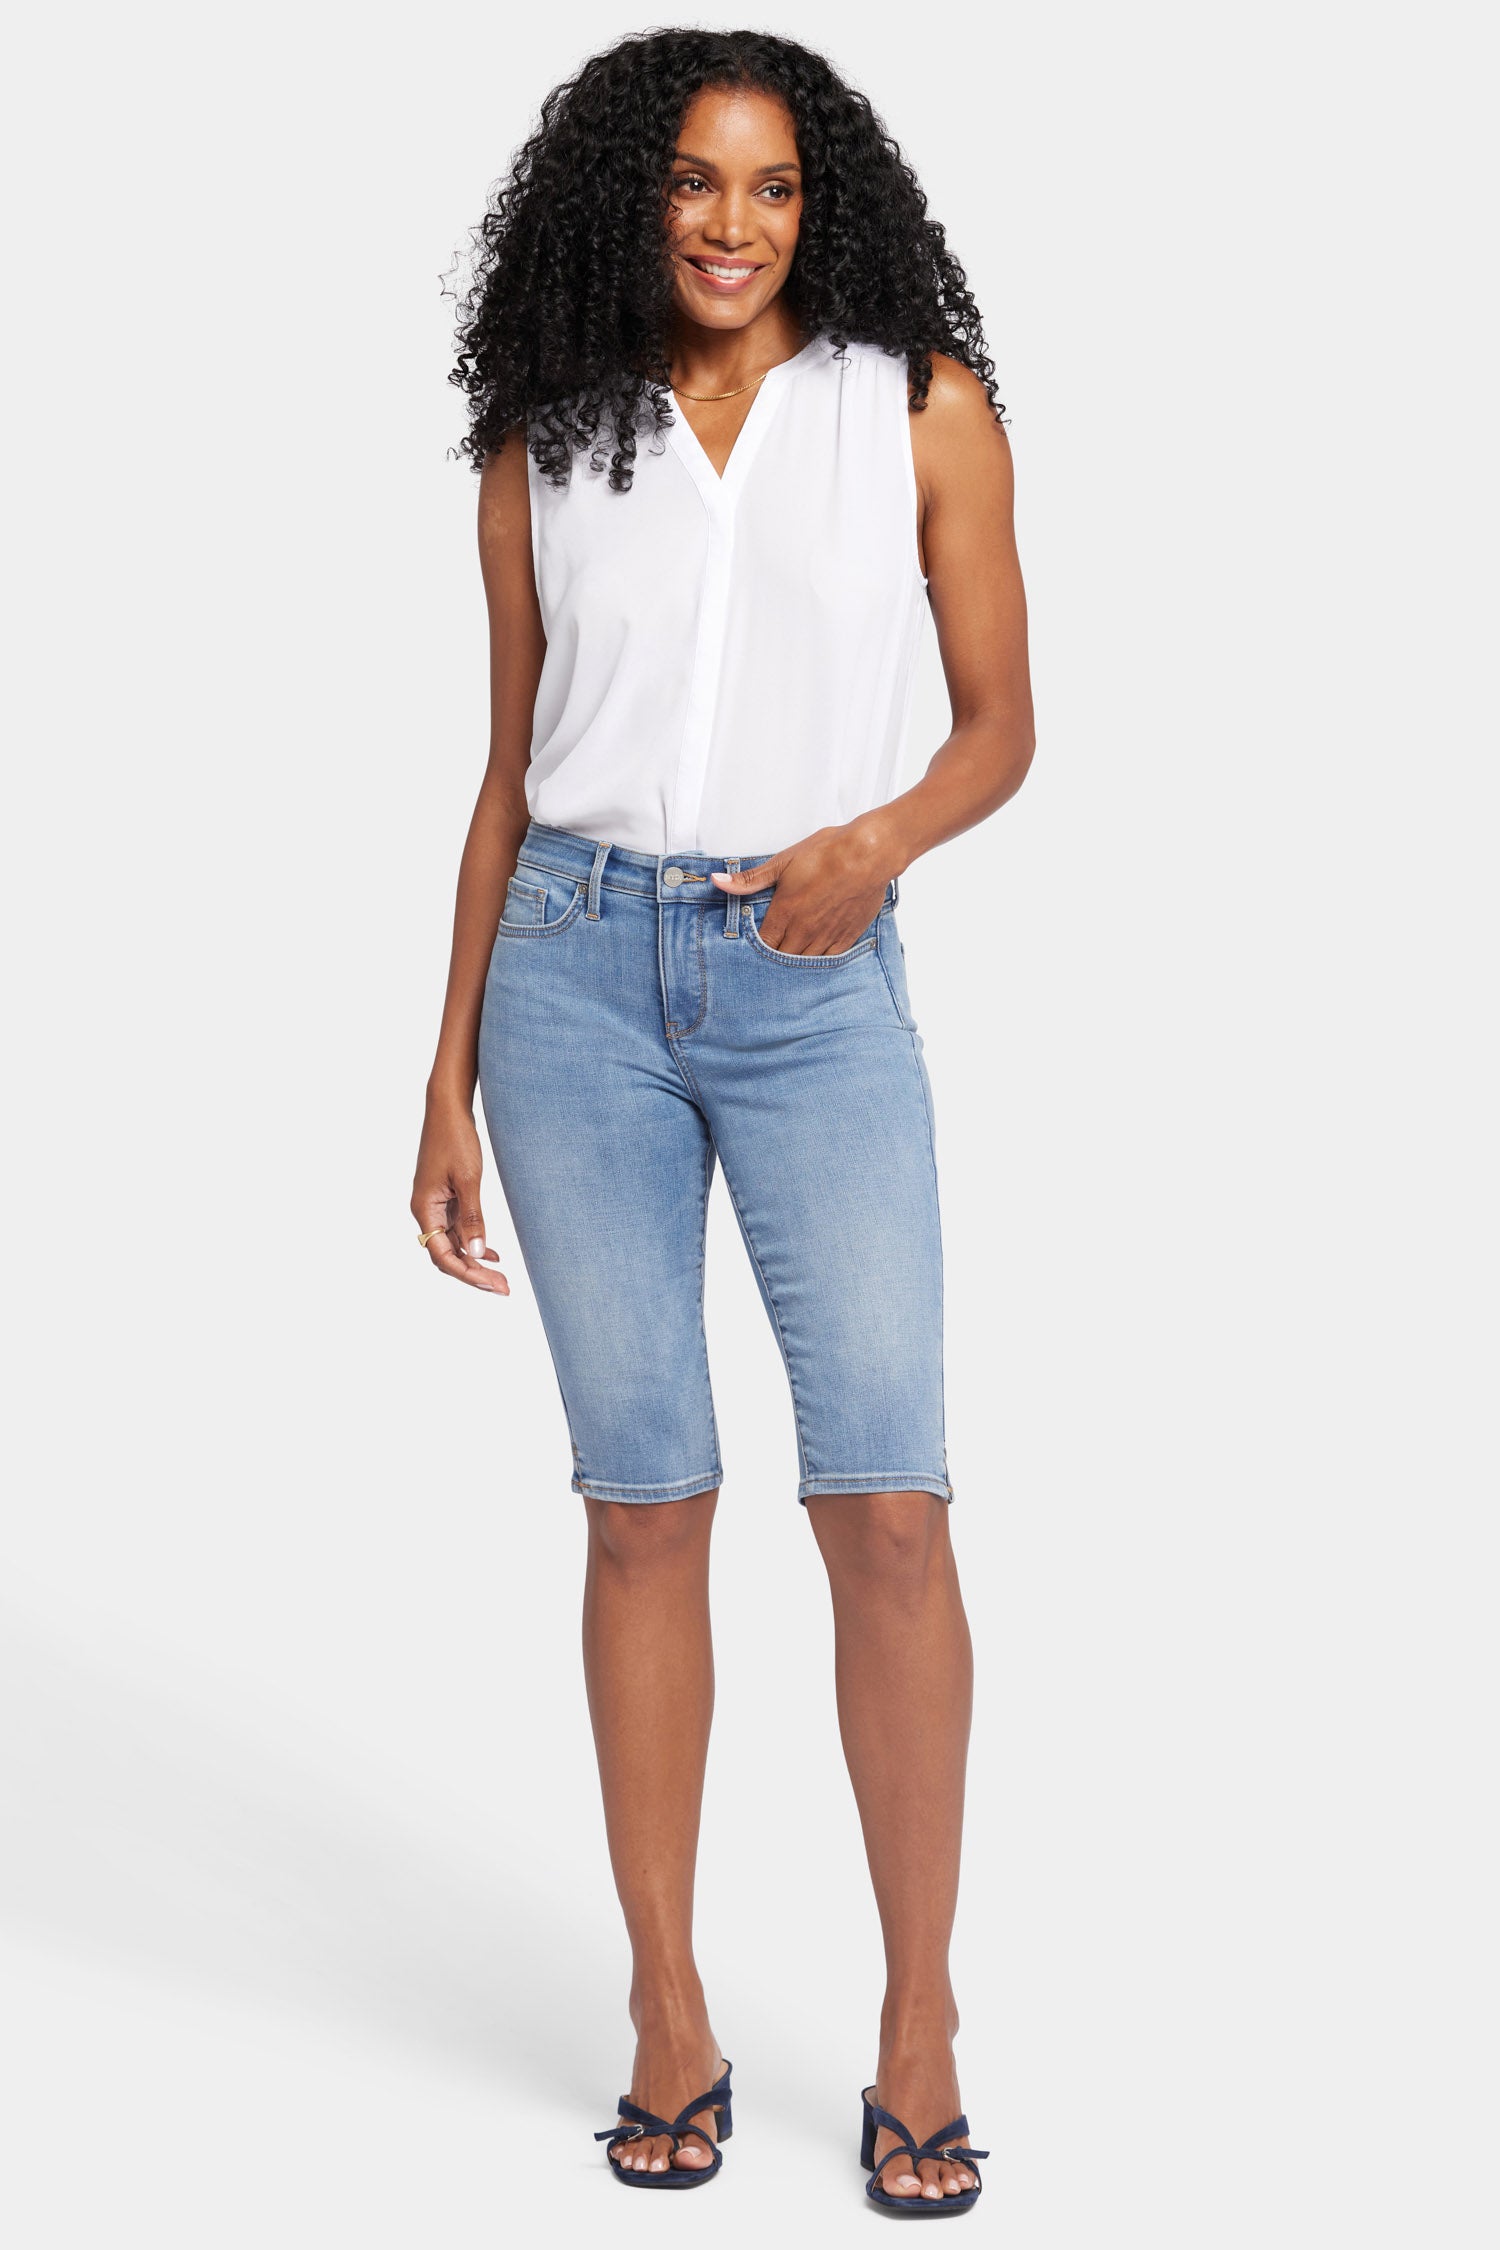 Buy Nifty Women's Denim Stretchable Slim Fit Capris  (CPRI_PLN_BTA_28_Bata_28) at Amazon.in